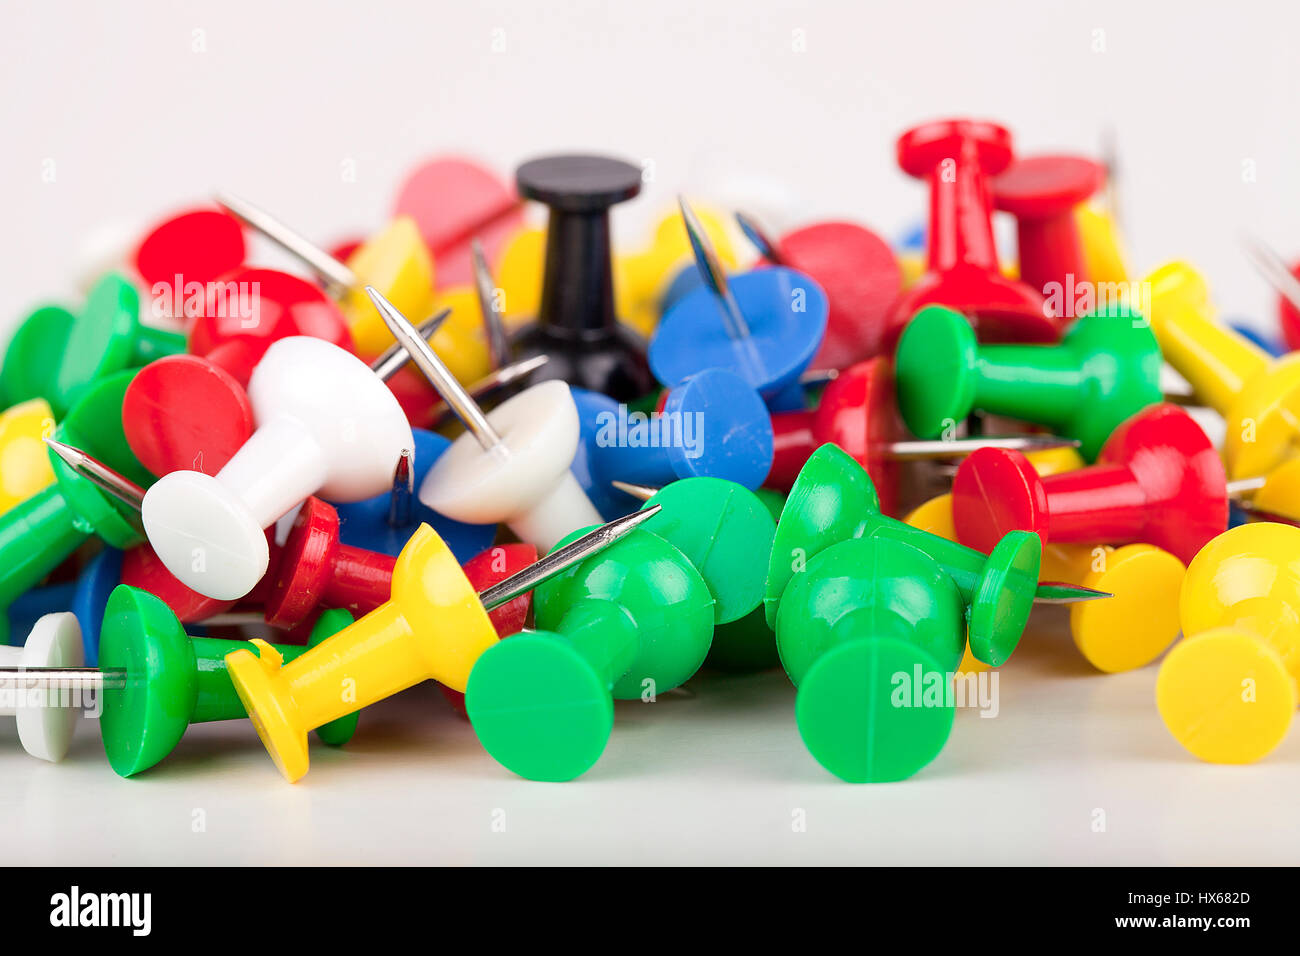 Pile of colorful pushpins on a white surface. Pile of thumbtacks isolated on white background. Stock Photo